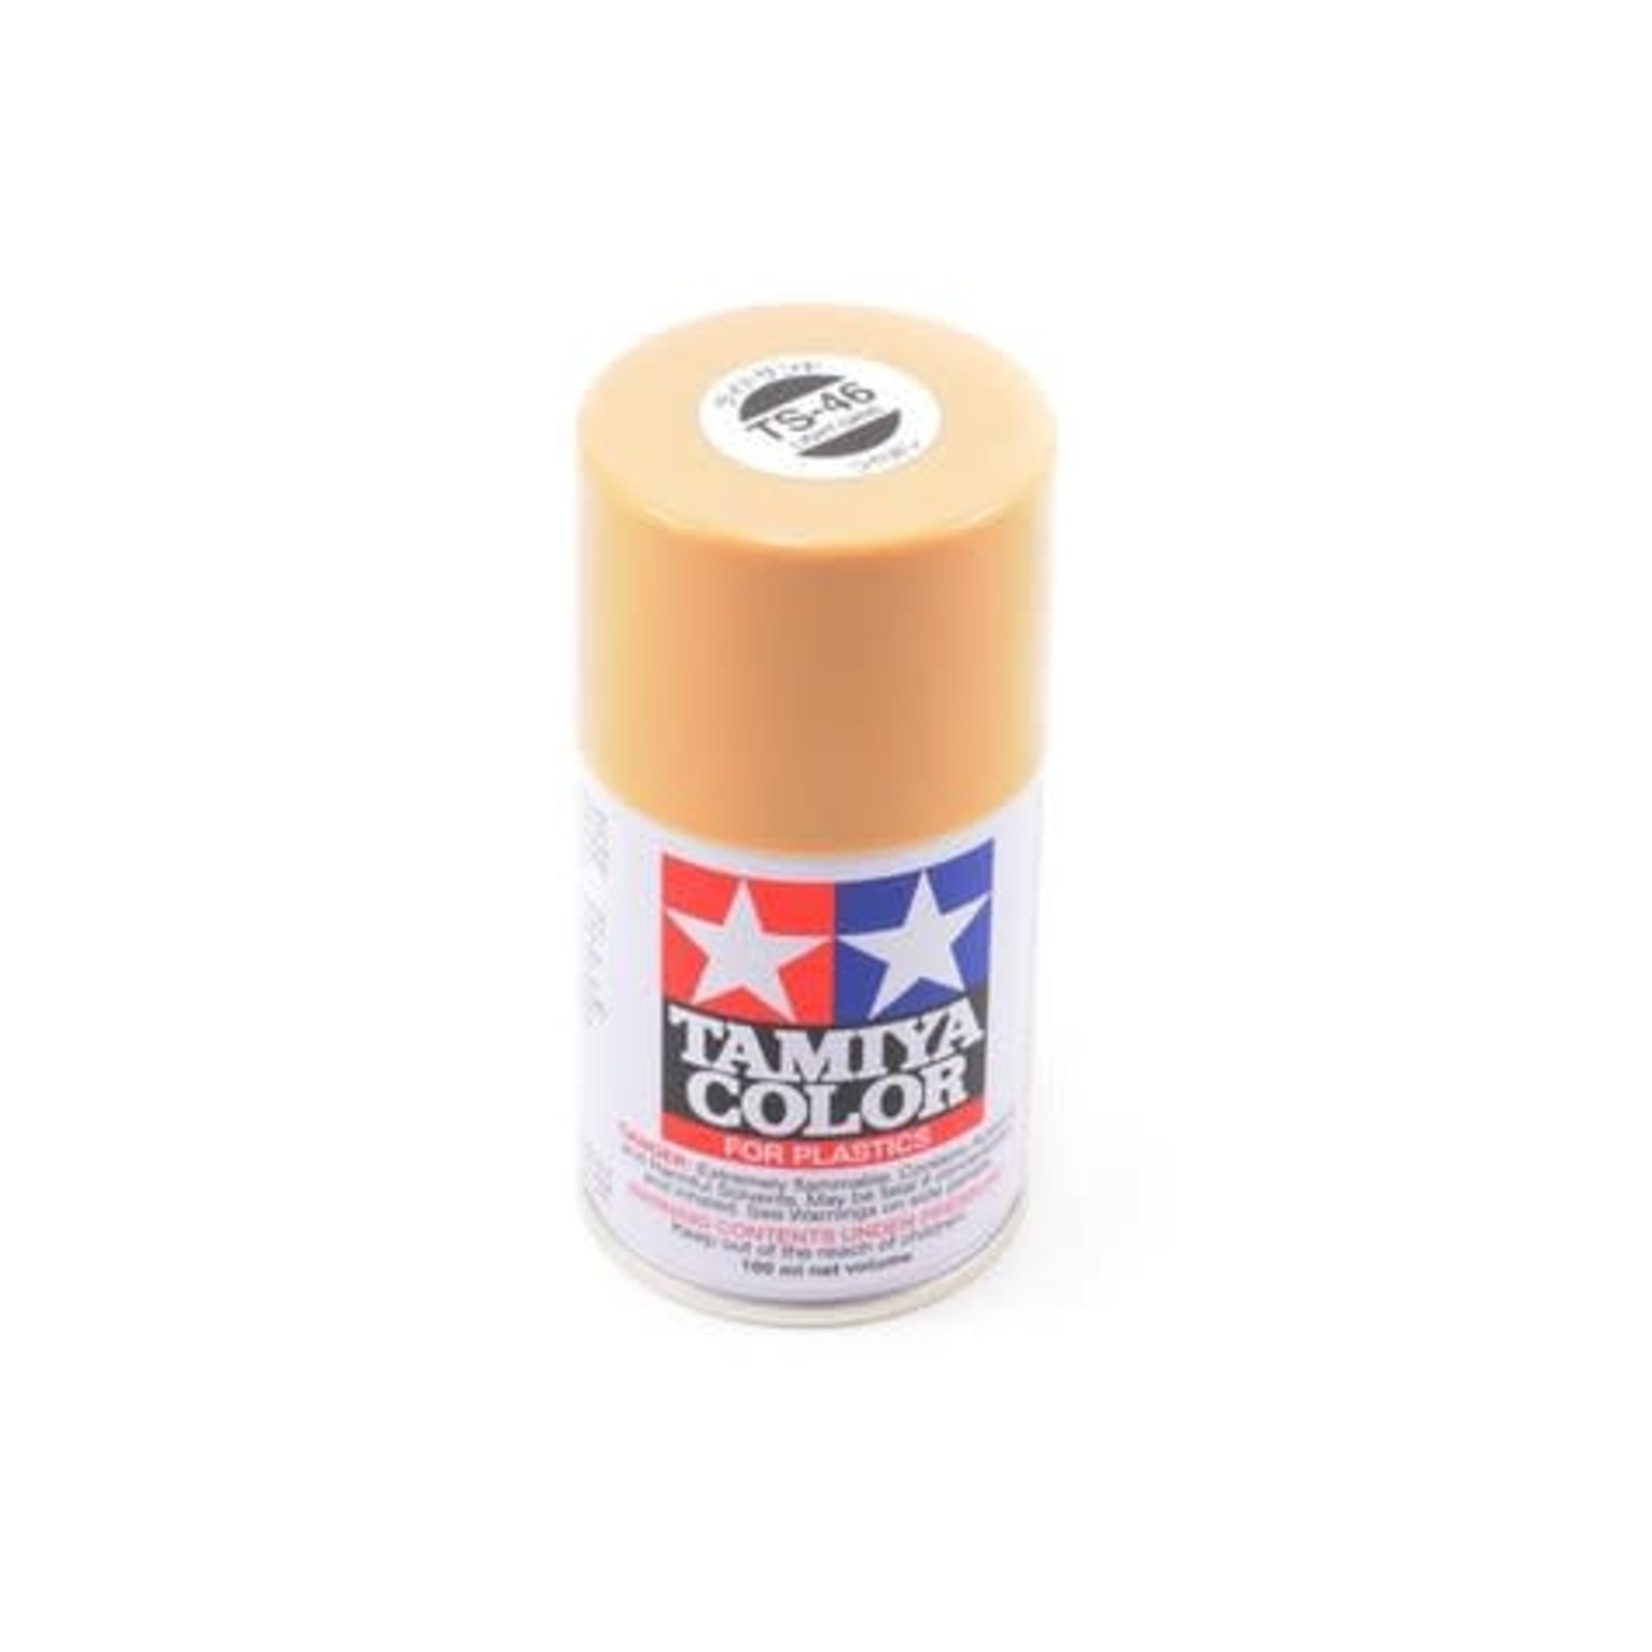 Tamiya Tamiya Light Sand Lacquer Spray Paint (100ml) #85046